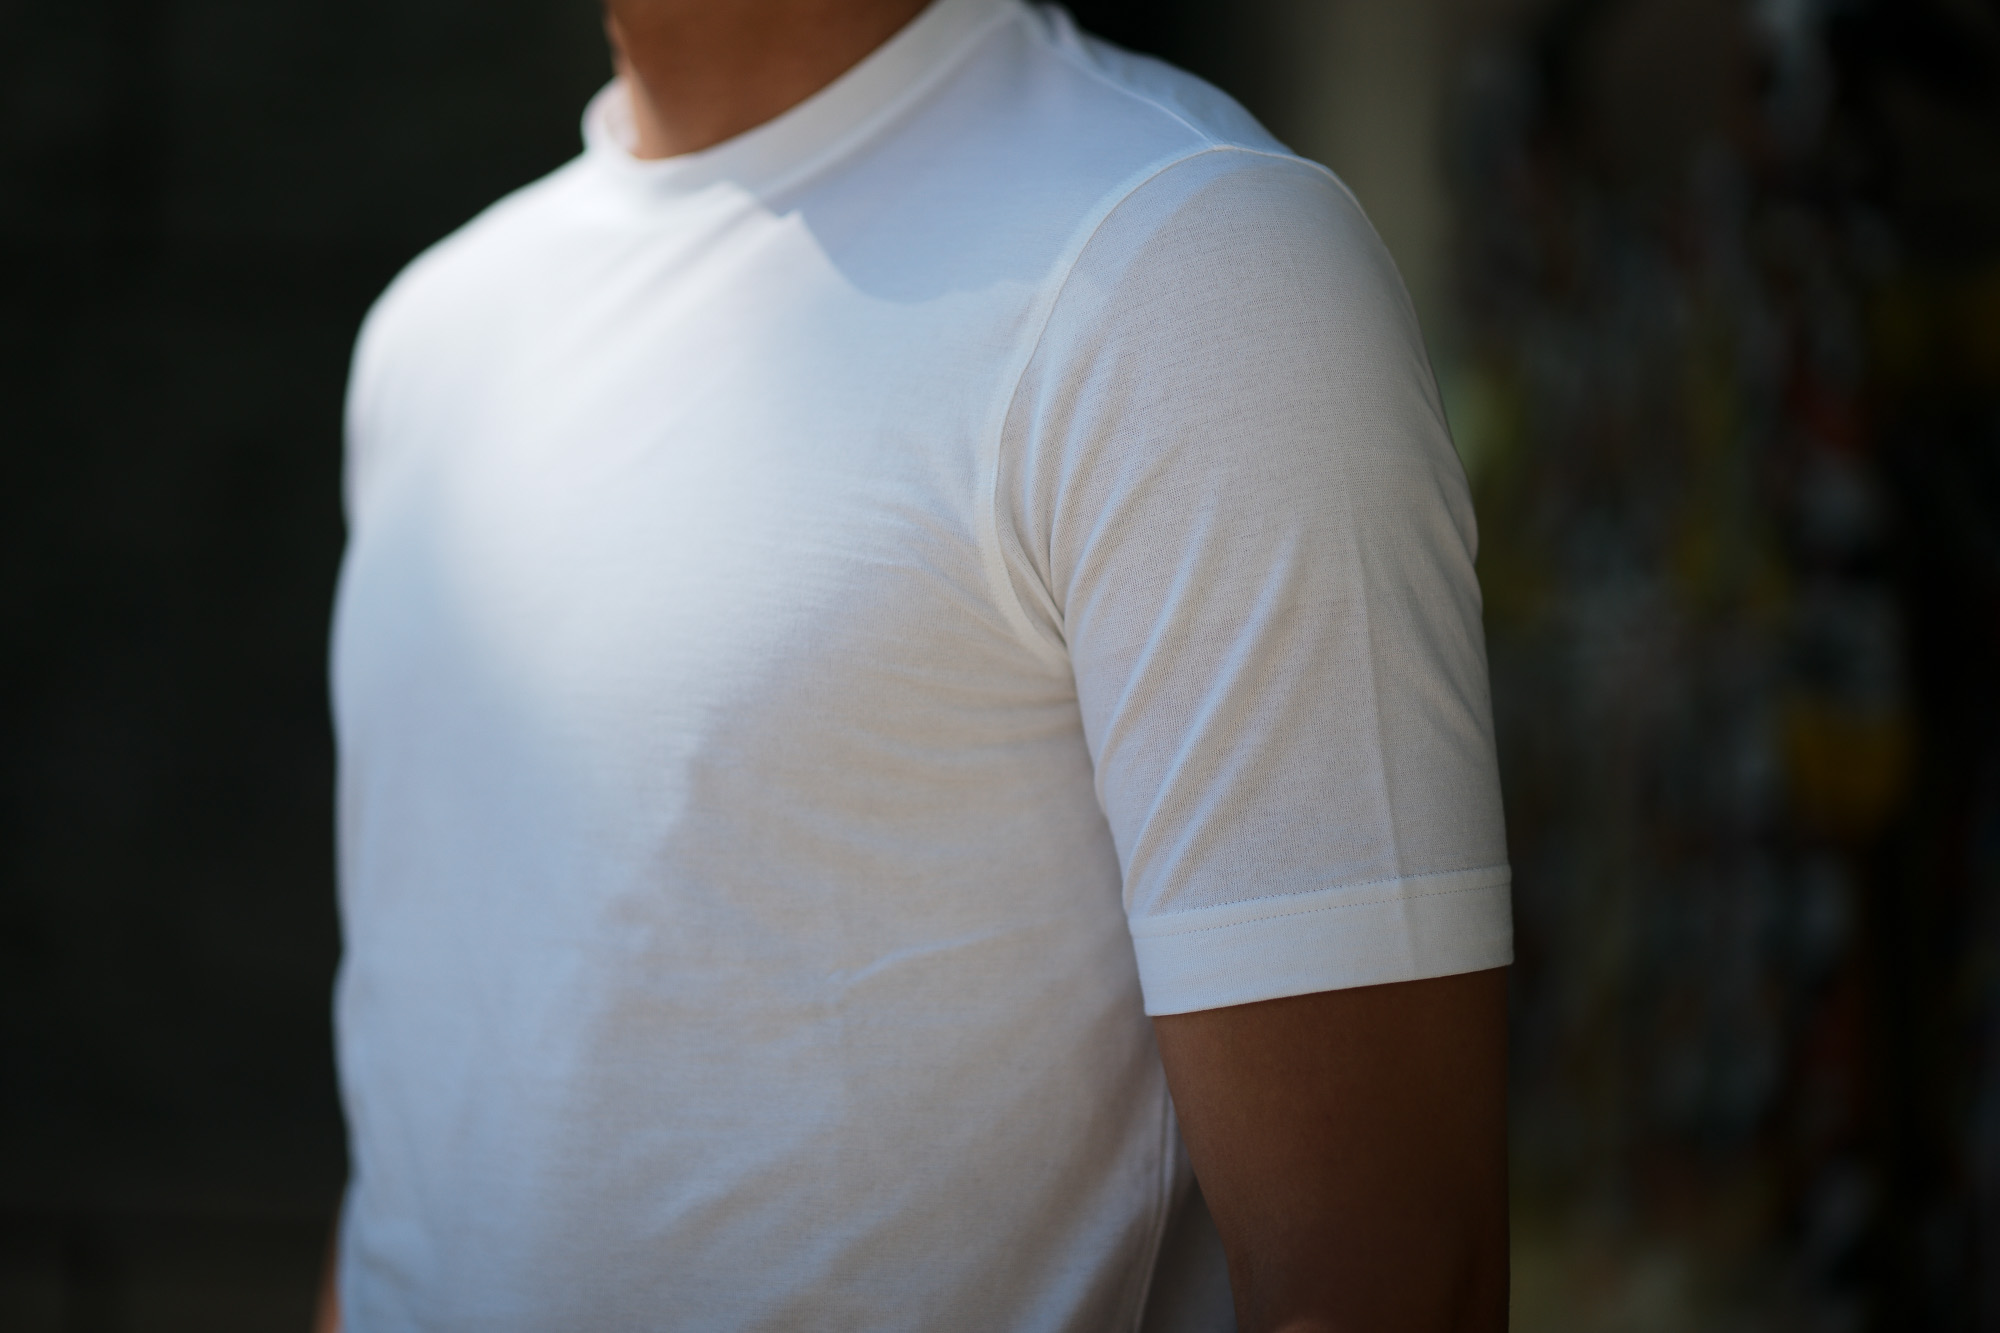 ZANONE (ザノーネ) Crew Neck T-shirt (クルーネックTシャツ) ice cotton アイスコットン Tシャツ WHITE (ホワイト・Z0001) MADE IN ITALY(イタリア製) 2019 春夏新作 愛知 名古屋 altoediritto アルトエデリット